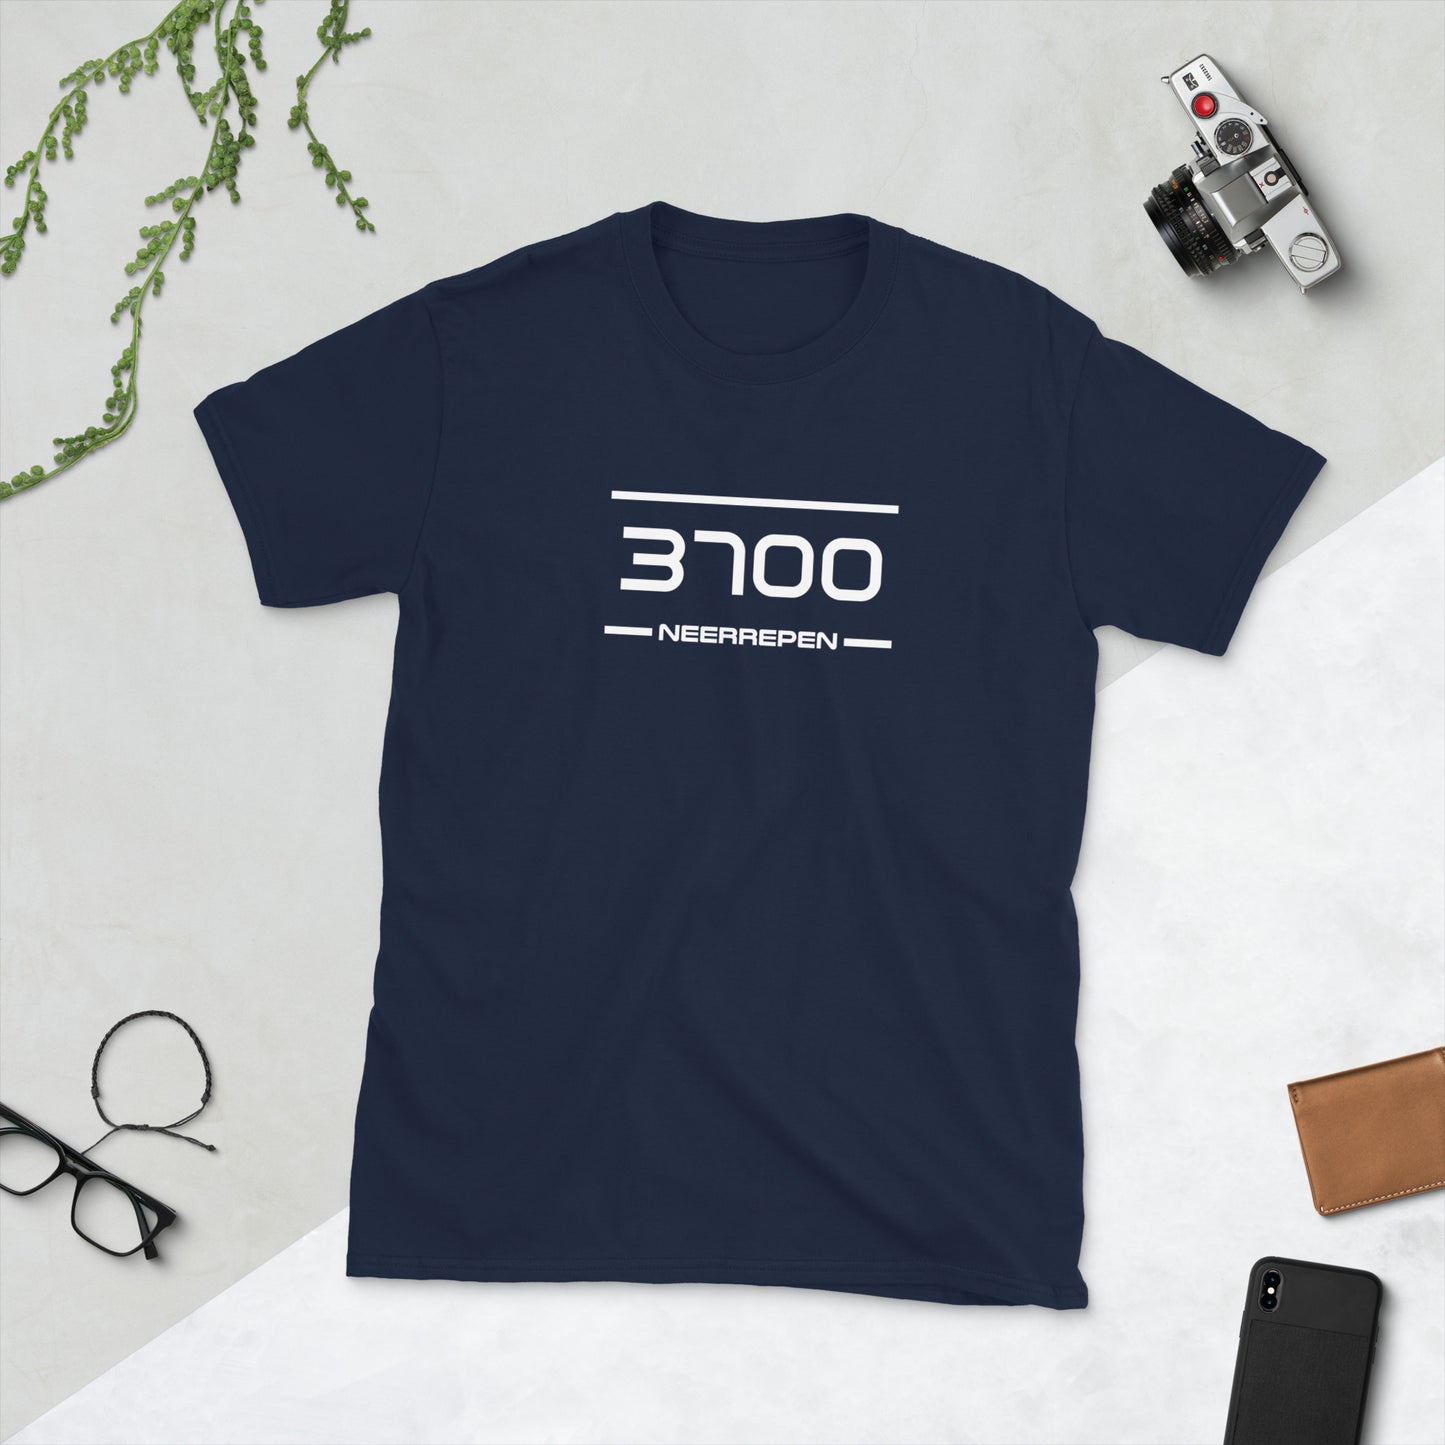 Tshirt - 3700 - Neerrepen